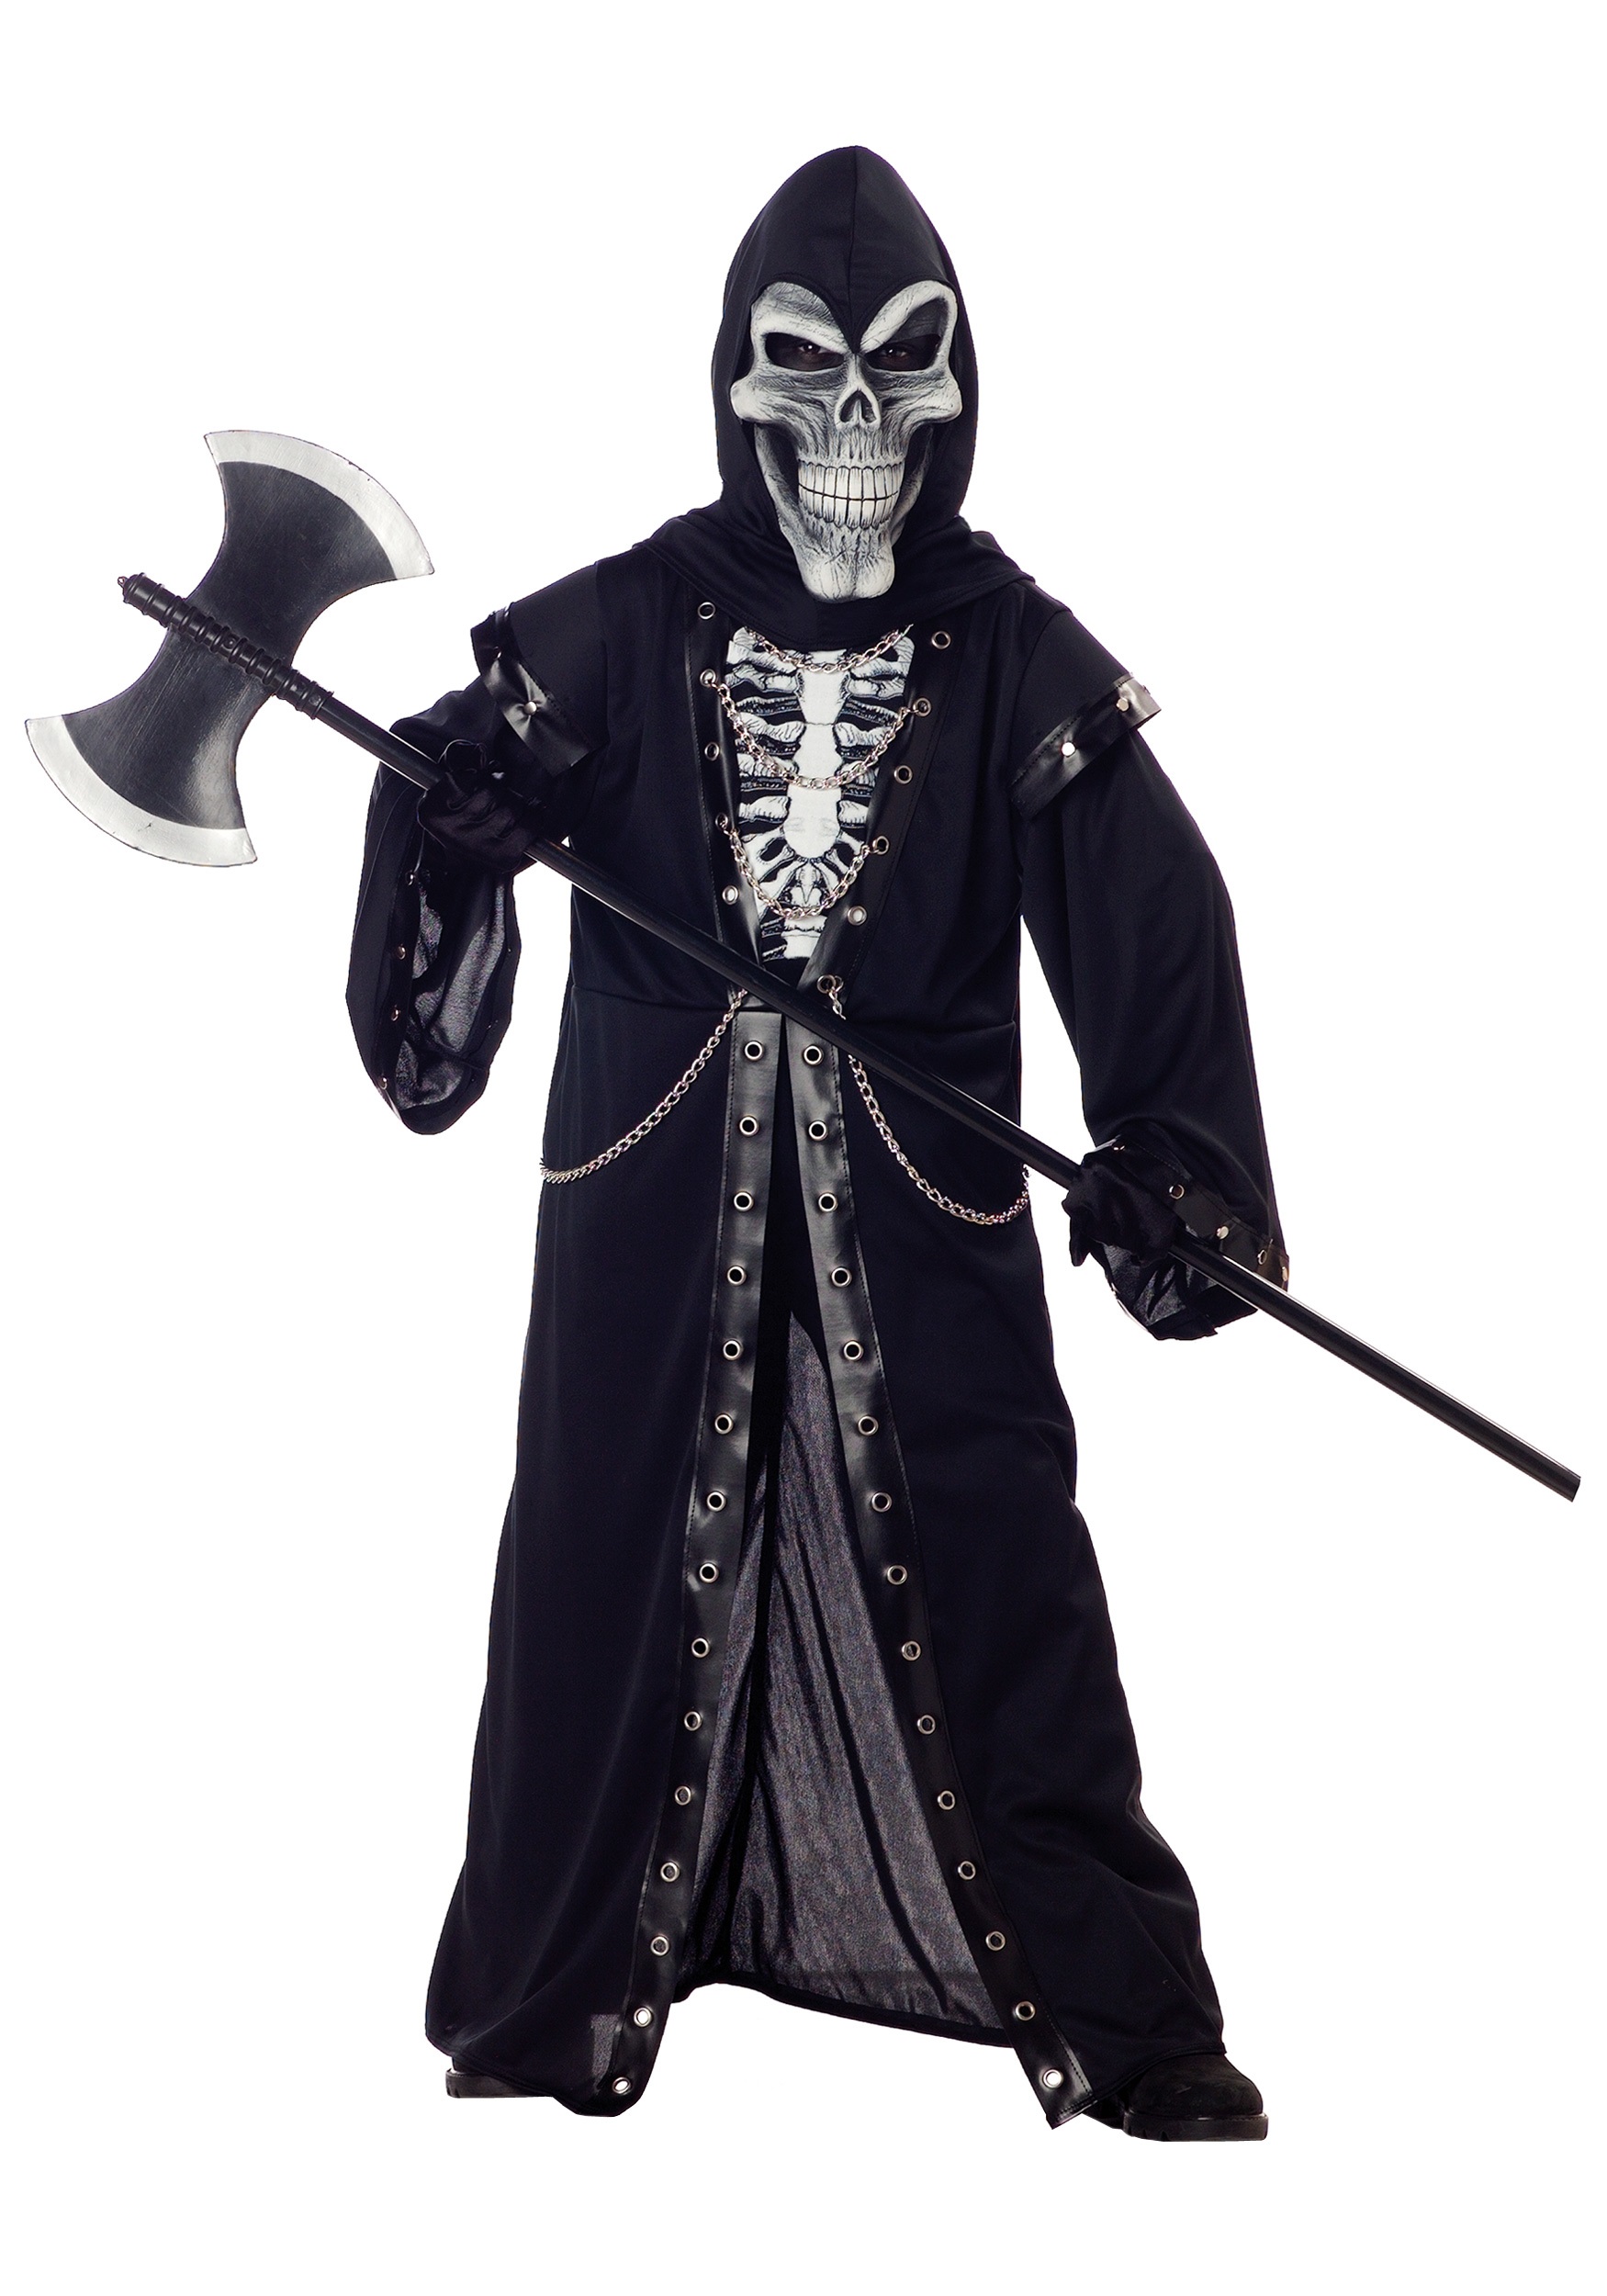 Kids Crypt Master Skeleton Costume - Halloween Costume Ideas 2019